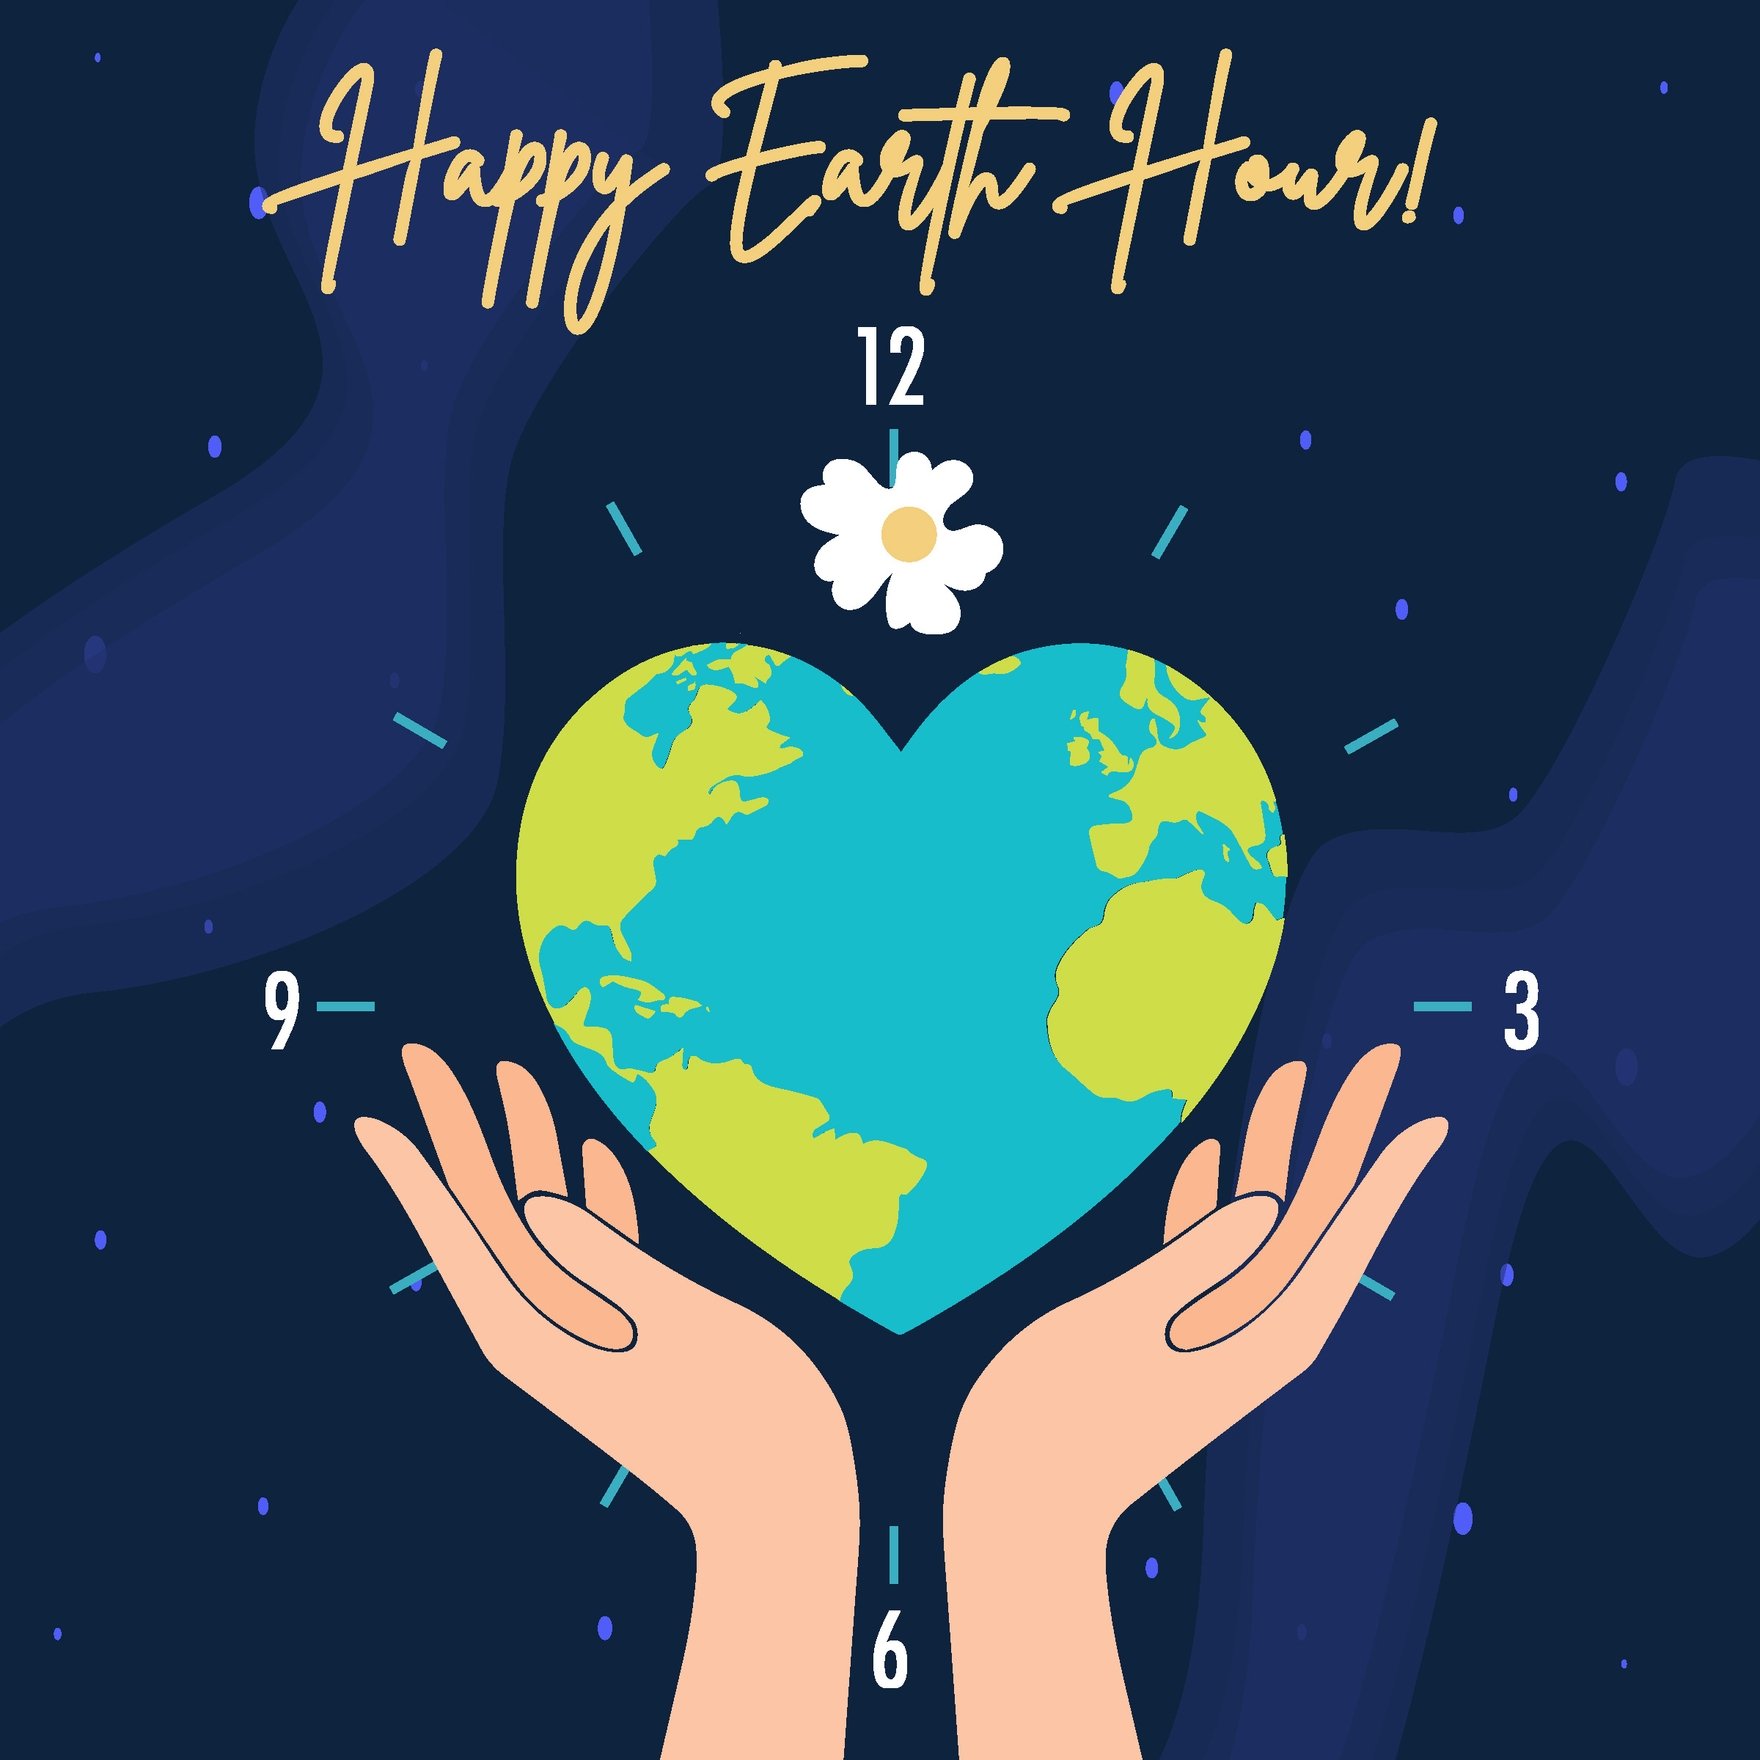 Free Happy Earth Hour Illustration in Illustrator, PSD, EPS, SVG, JPG, PNG